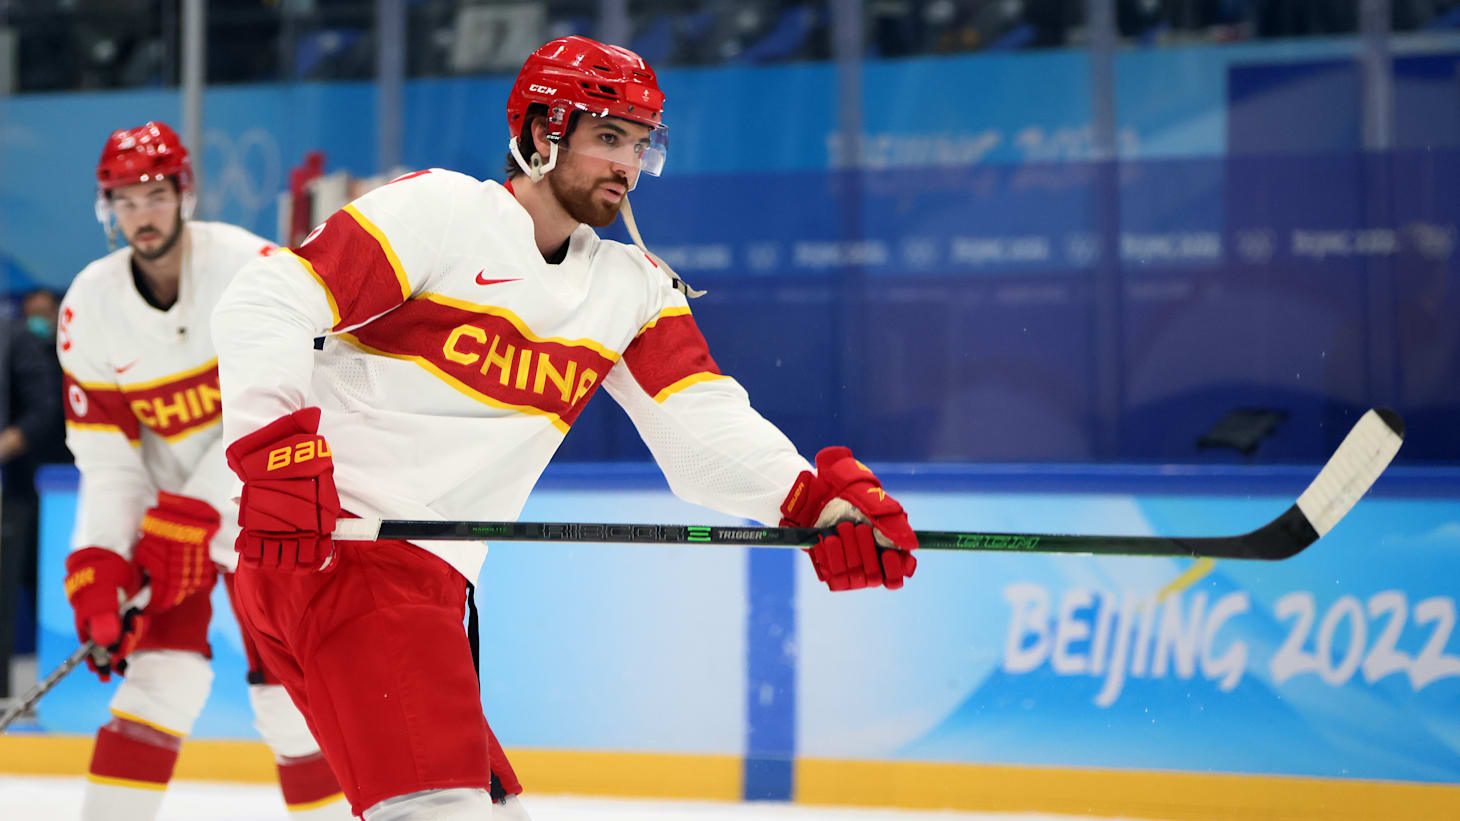 Czech ice hockey legend appointed Beijing 2022 ambassador